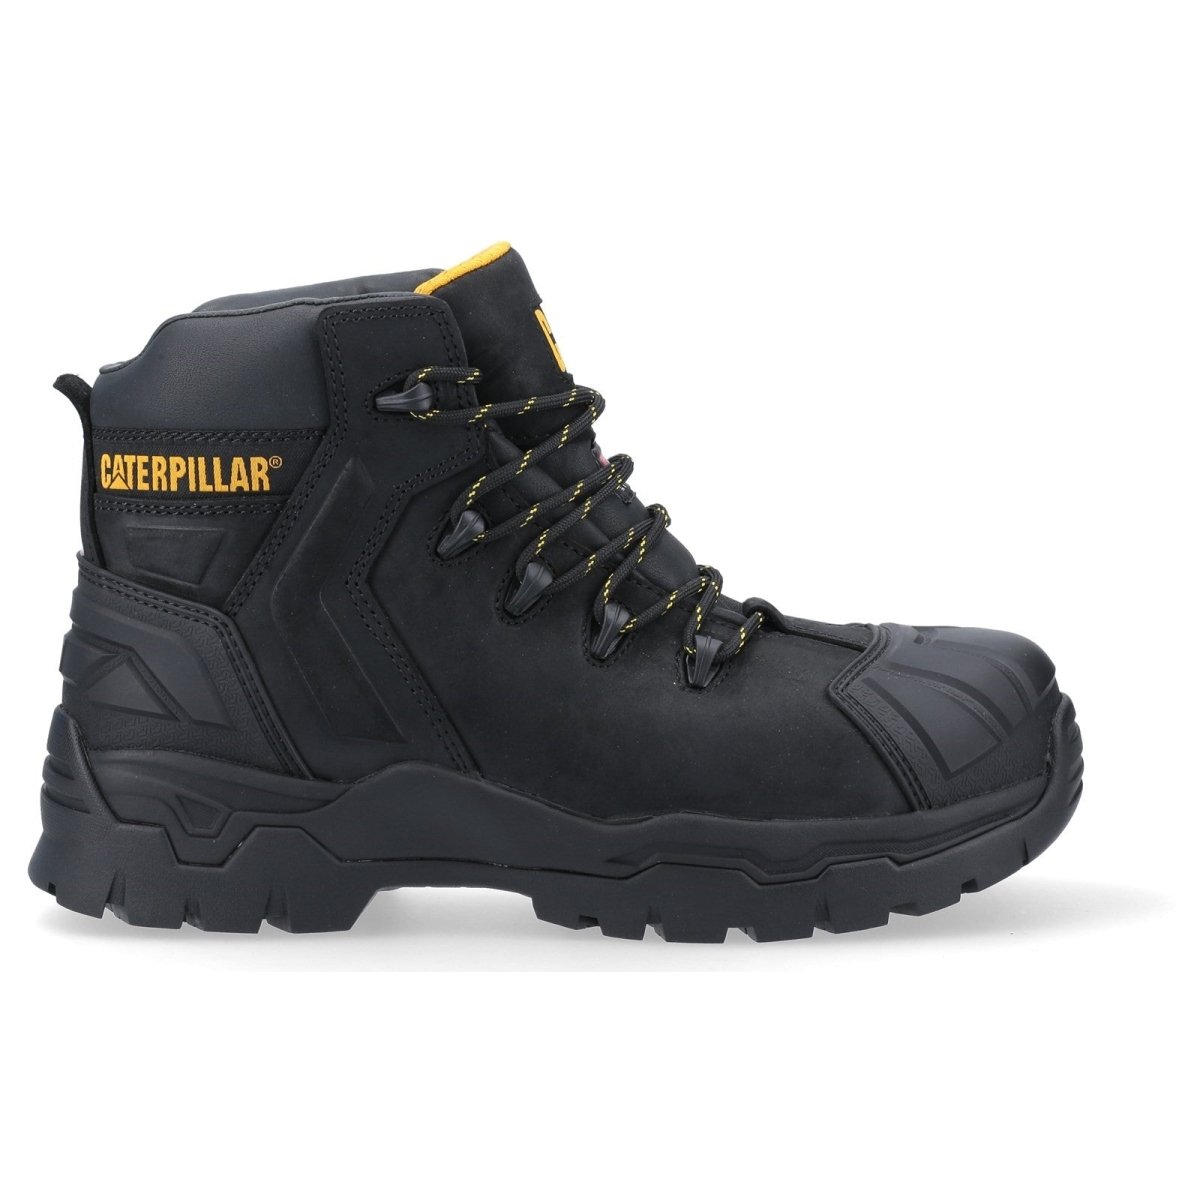 Caterpillar Everett S3 Waterproof Composite Toe Safety Boots - Shoe Store Direct